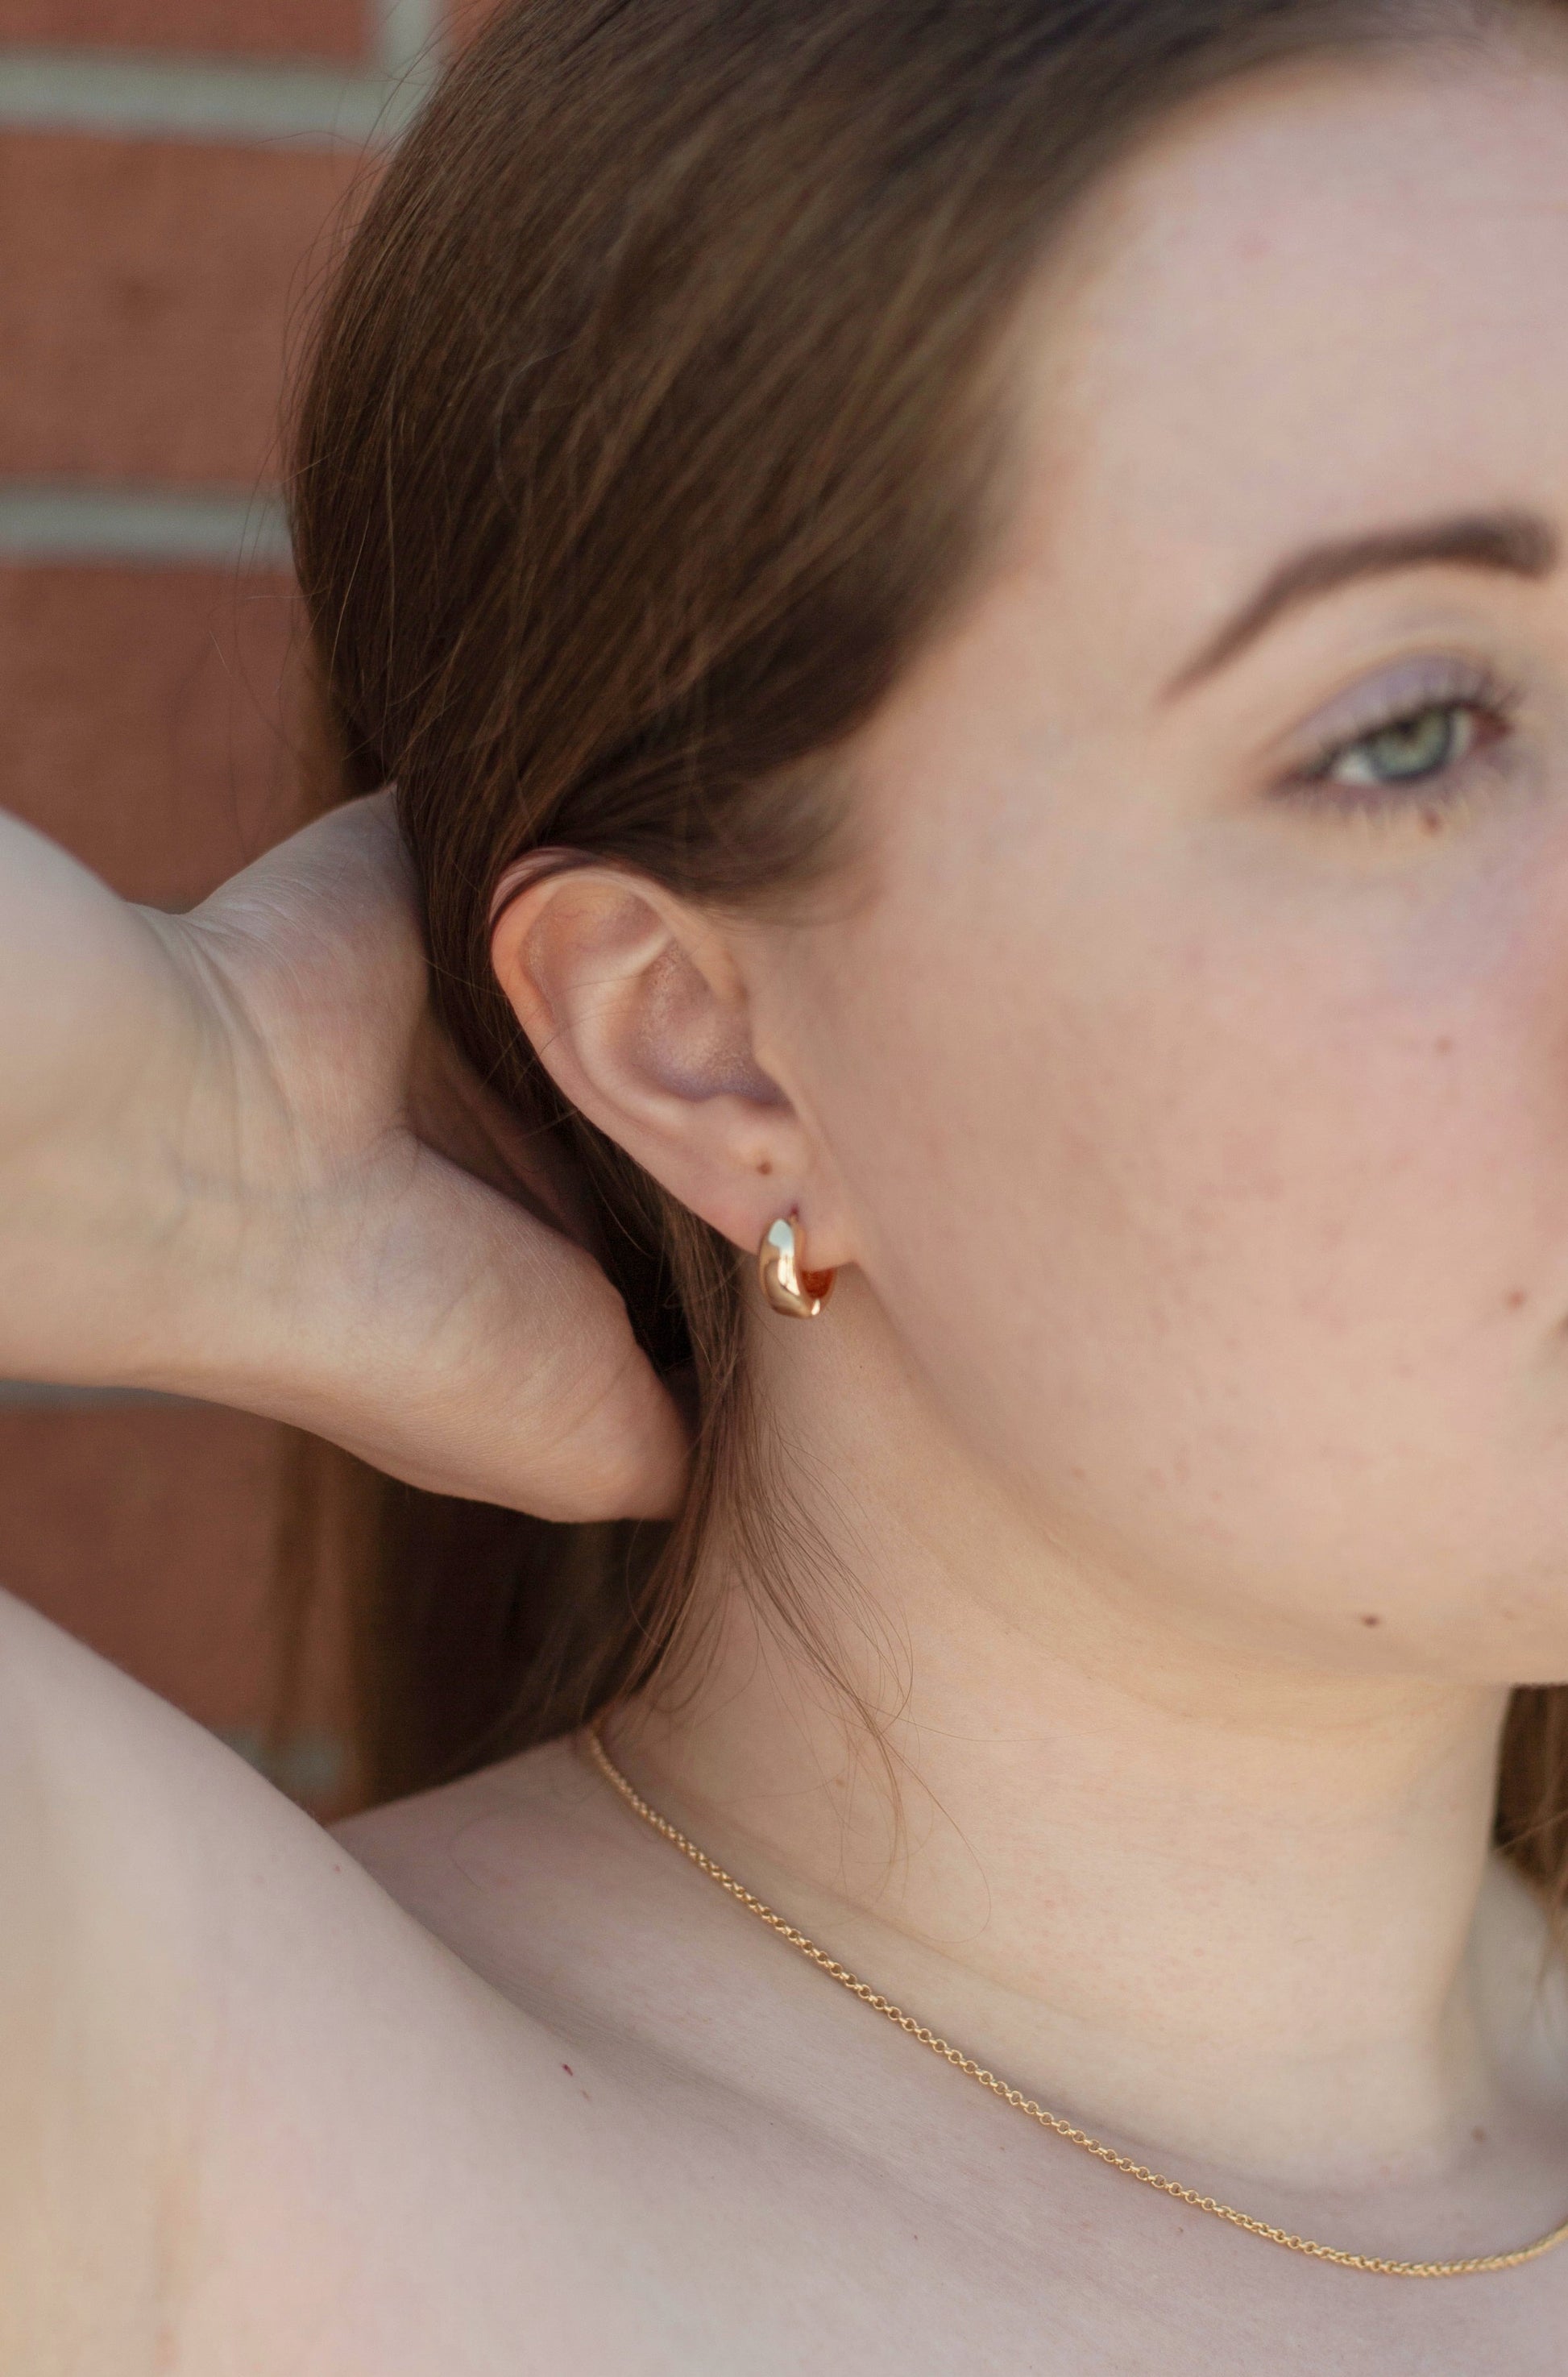 A model swept back her hair showcasing the earring sparkles on her ear.